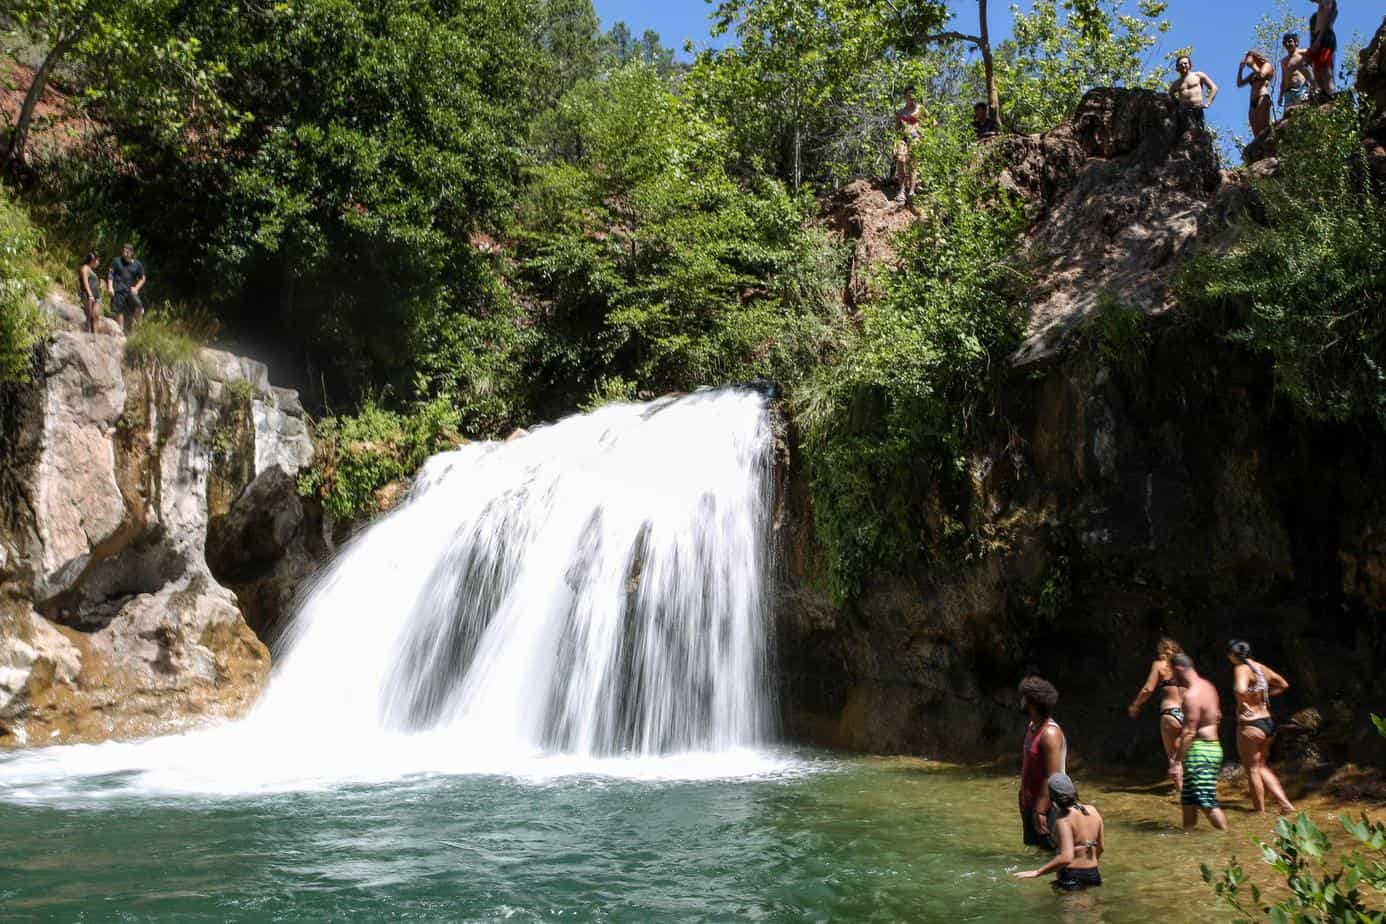 Fossil Creek waterfall tops swimming area charts - Sedona Red Rock News